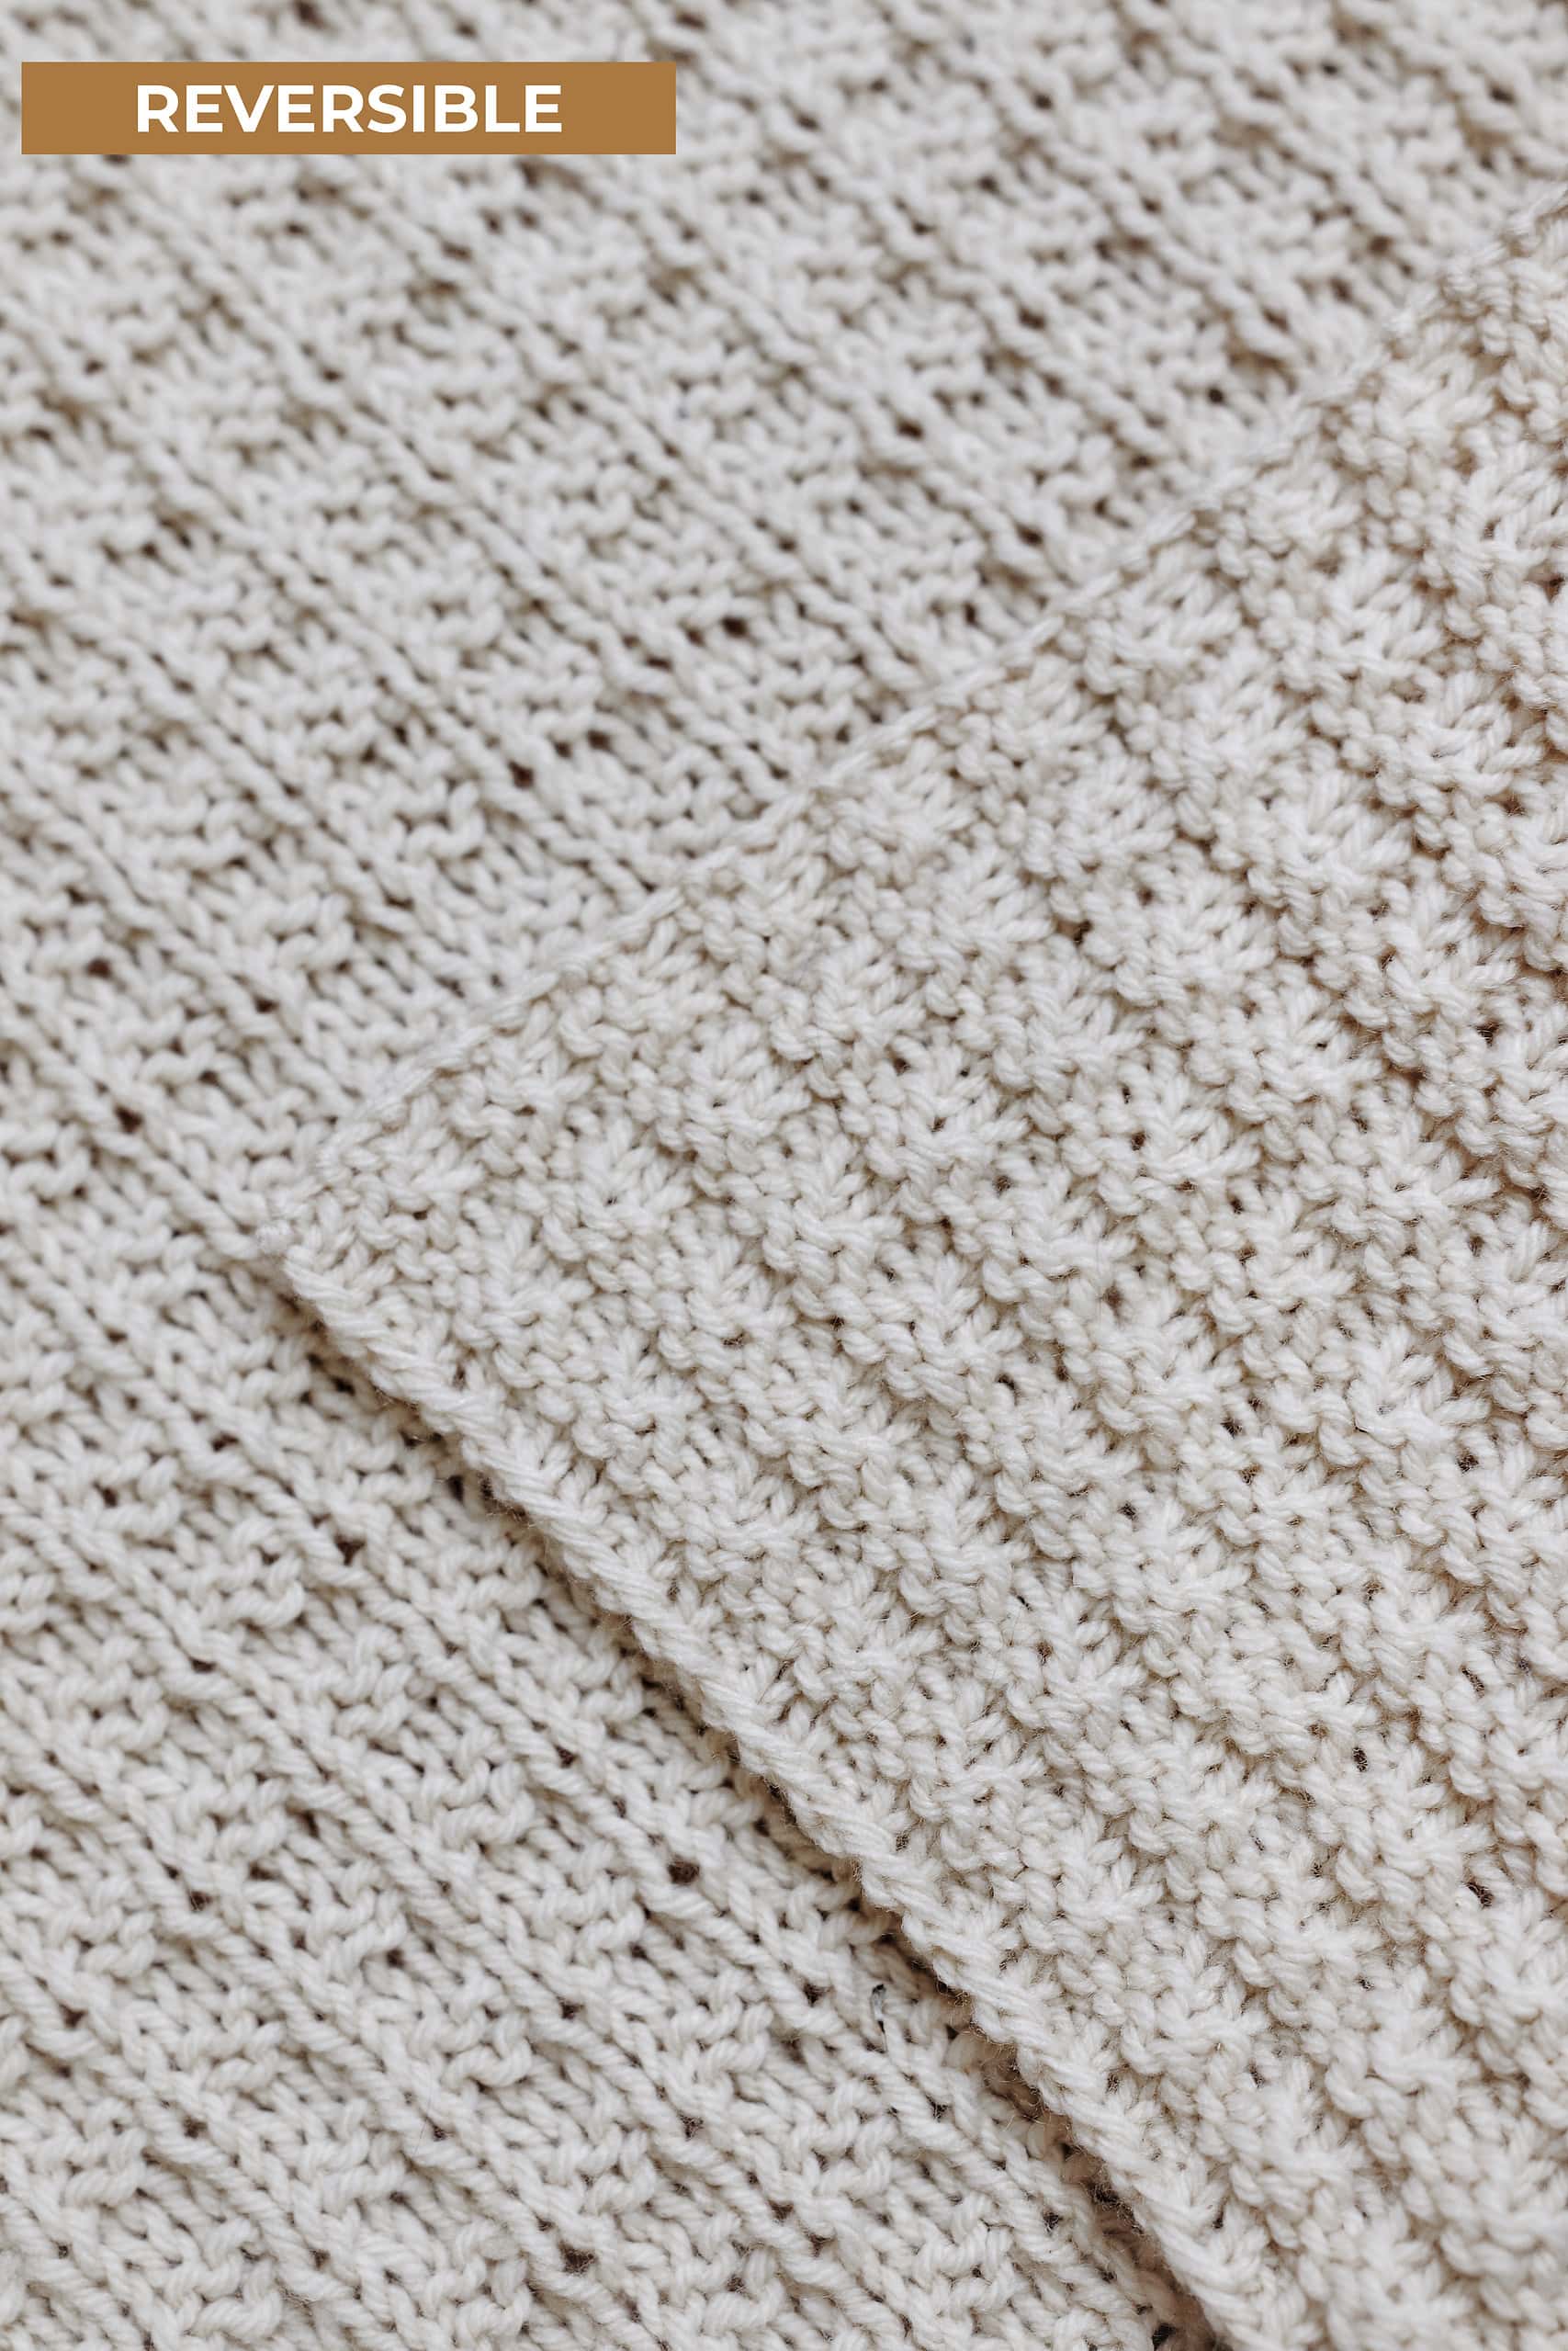 The Sunlit Tea Towel Knitting Pattern